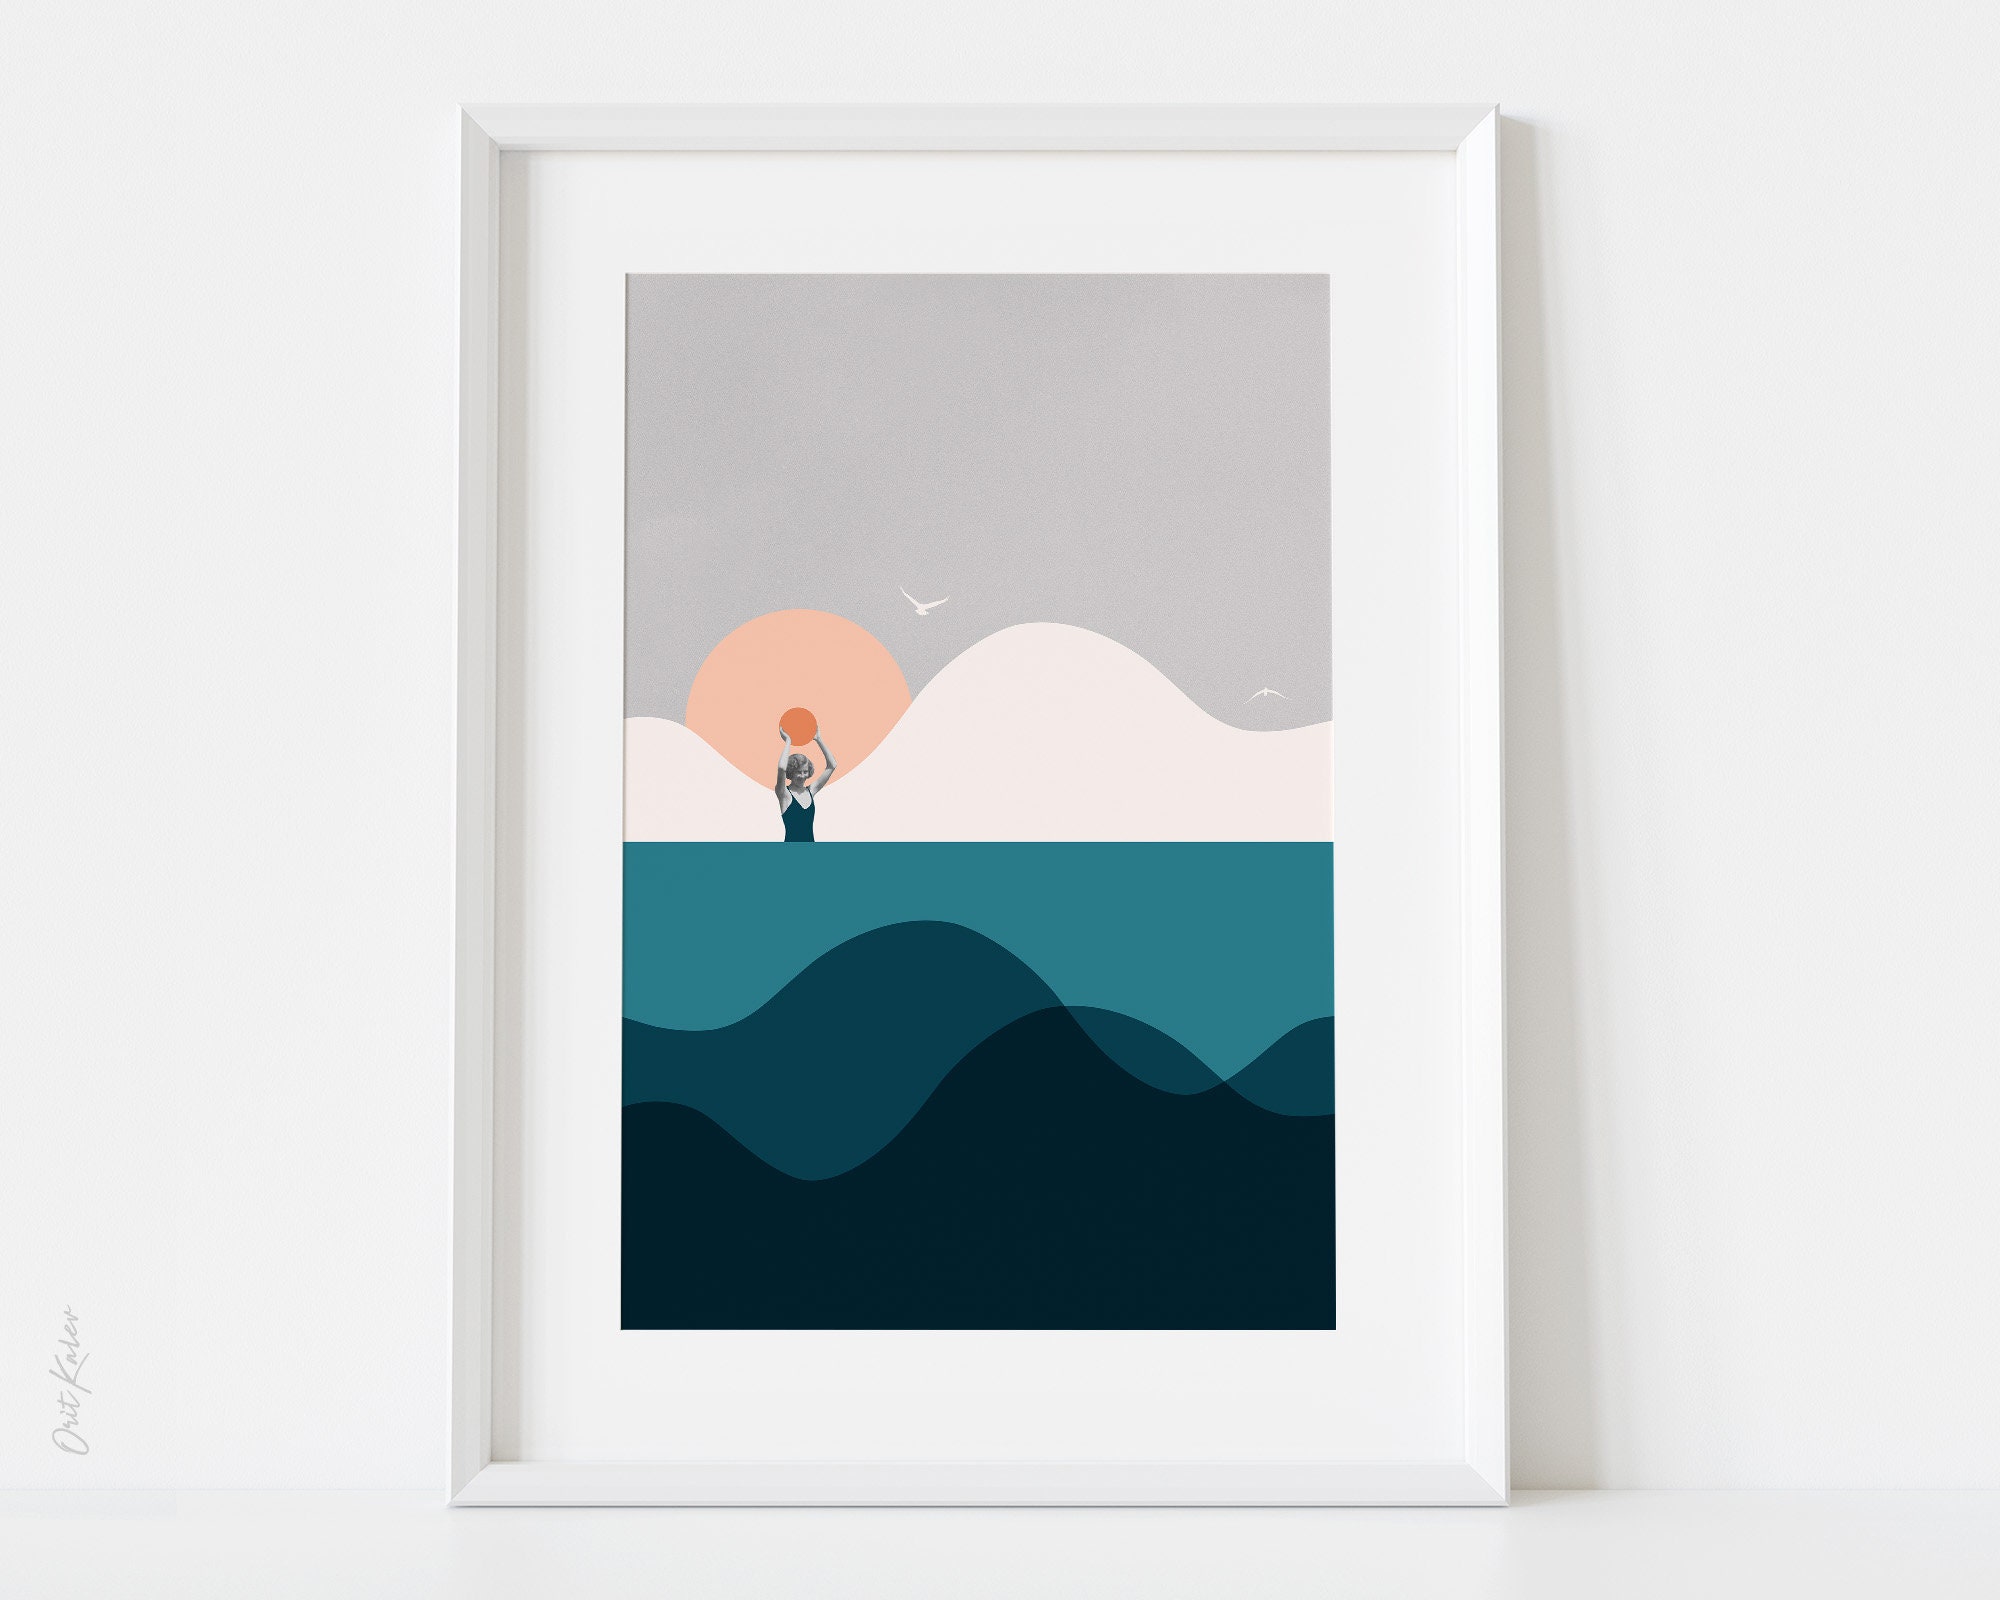 How to frame a print - Orit Kalev